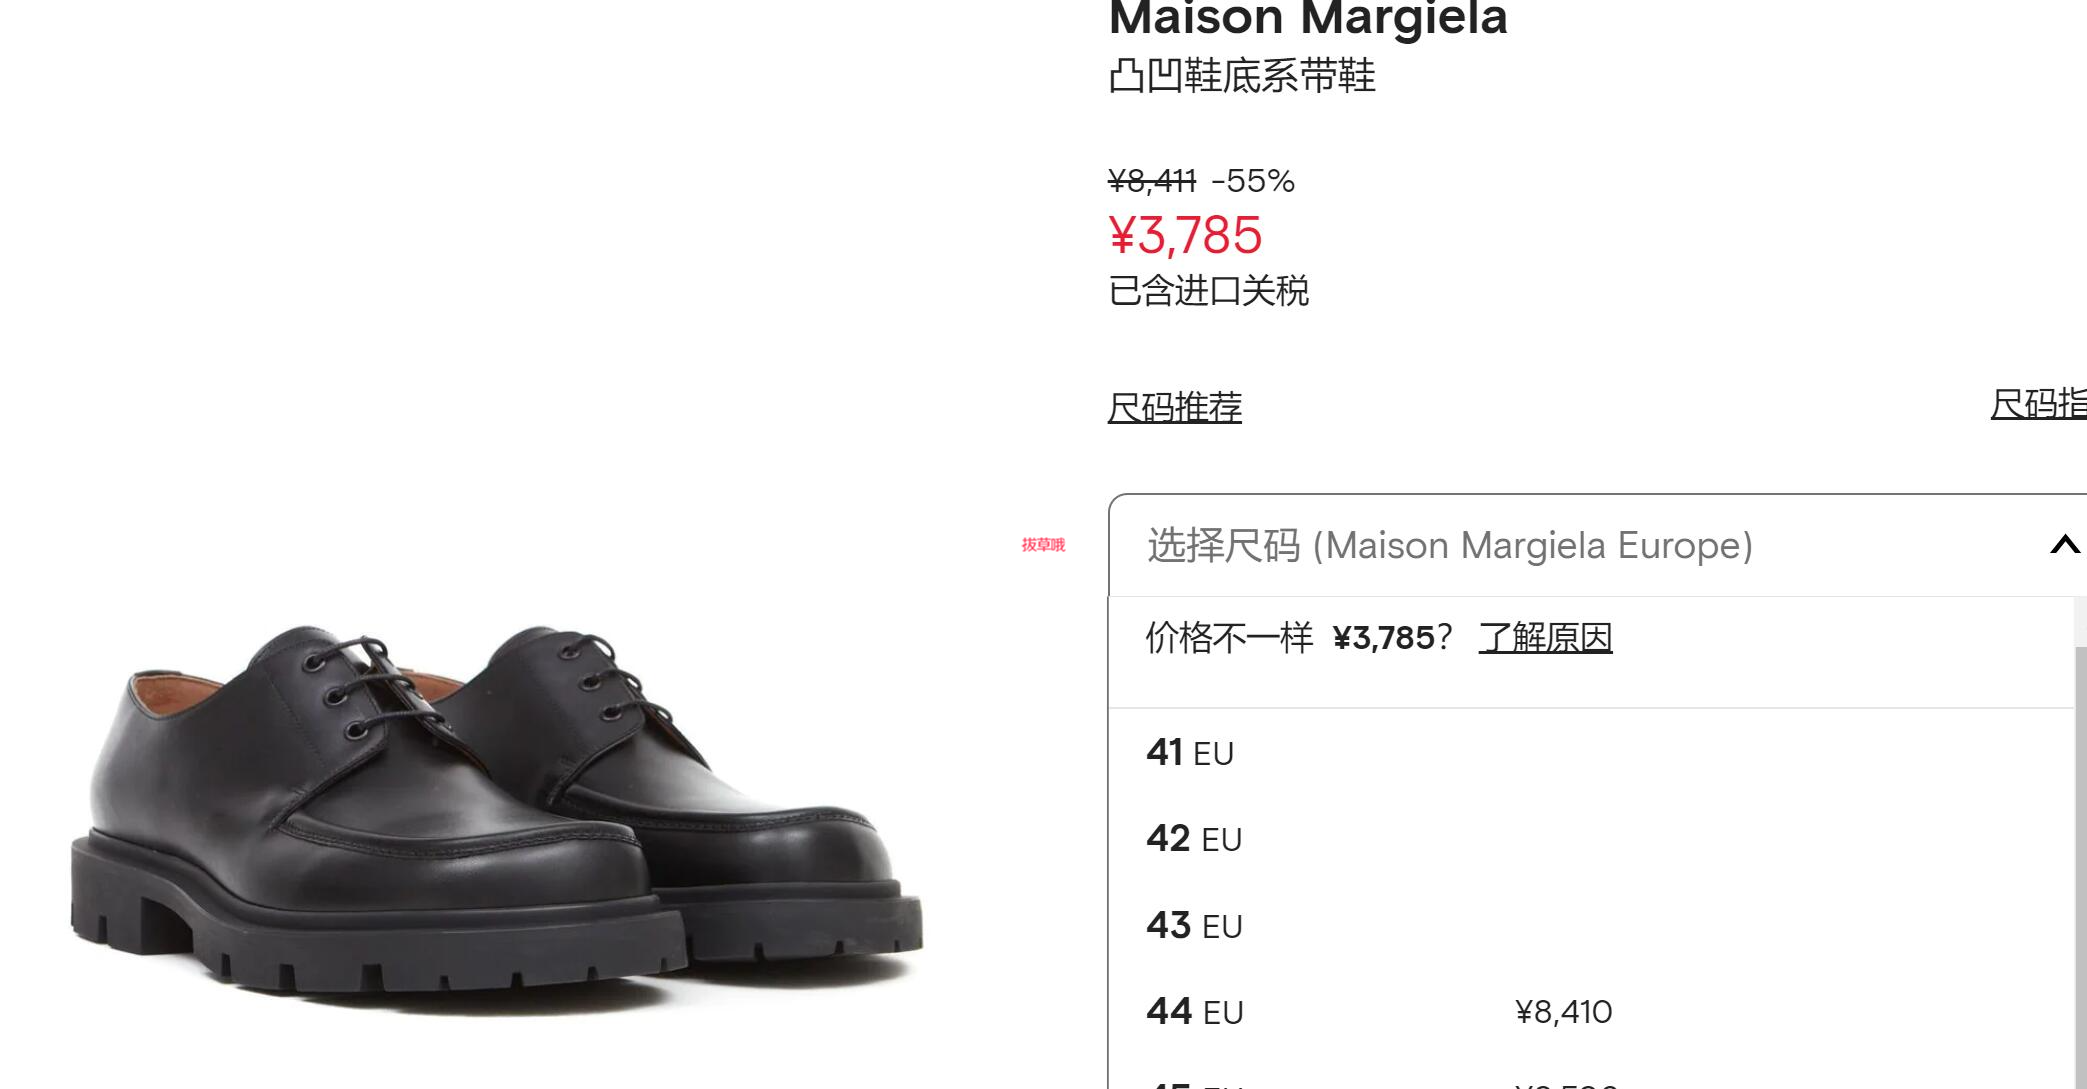 Maison Margiela 凸凹鞋底系带德比鞋,骨折价3785 - 拔草哦